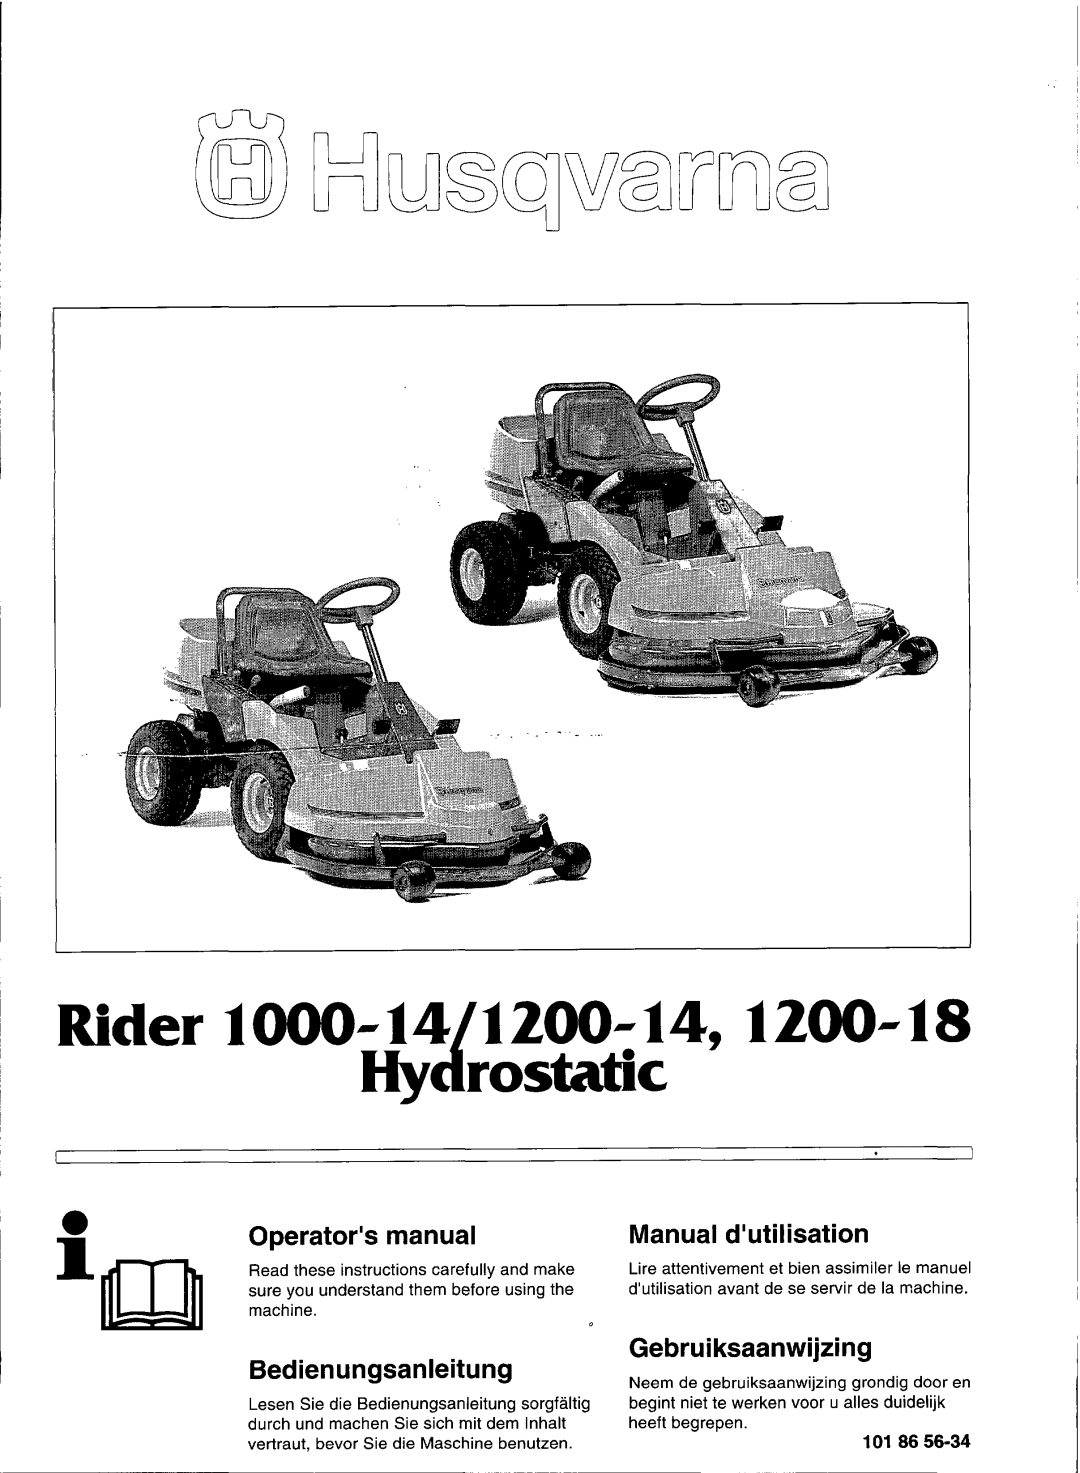 Husqvarna 1200-18, 1200-14, 1000-14 manual 